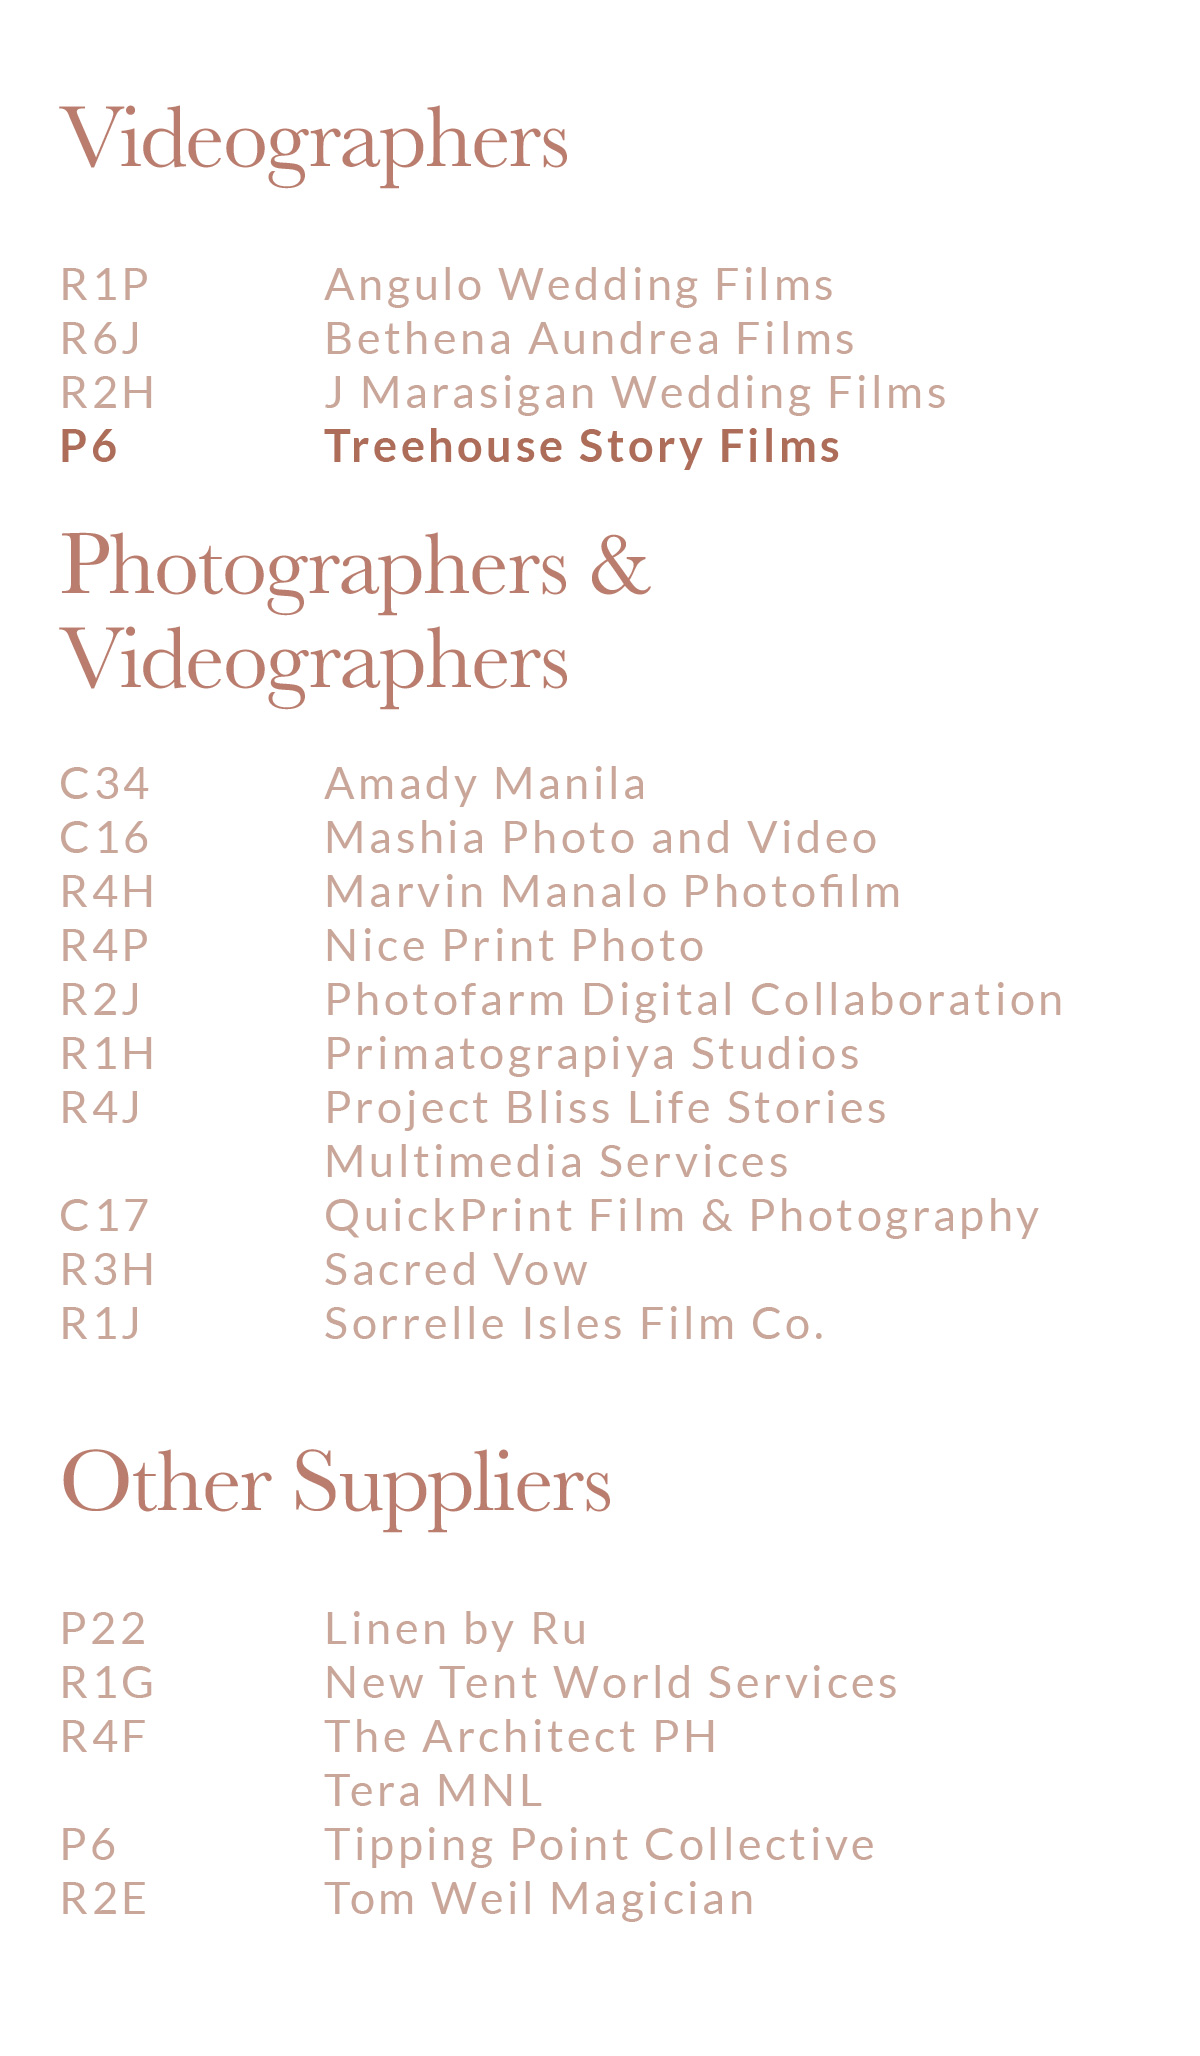 R1P, Angulo Wedding Films /R6J, Bethena Aundrea Films /R2H, J Marasigan Wedding Films /C34, Oak St. Studios /P6, Treehouse Story Films /C16, Masiha Photo and Video /R4H, Marvin Manalo Photofilm /R4P, Nice Print Photo /R2J, Photofarm Digital Collaboration /R1H, Primatograpiya Studios /R4J, Project Bliss Life Stories Multimedia Services /C17, QuickPrint Film & Photography /R3H, Sacred Vow /R1J, Sorrelle Isles Film Co. /P22, Linen by Ru /R1G, New Tent World Services /R4F, The Architect PH /Tera MNL /P6, Tipping Point Collective /R2E, Tom Weil Magician